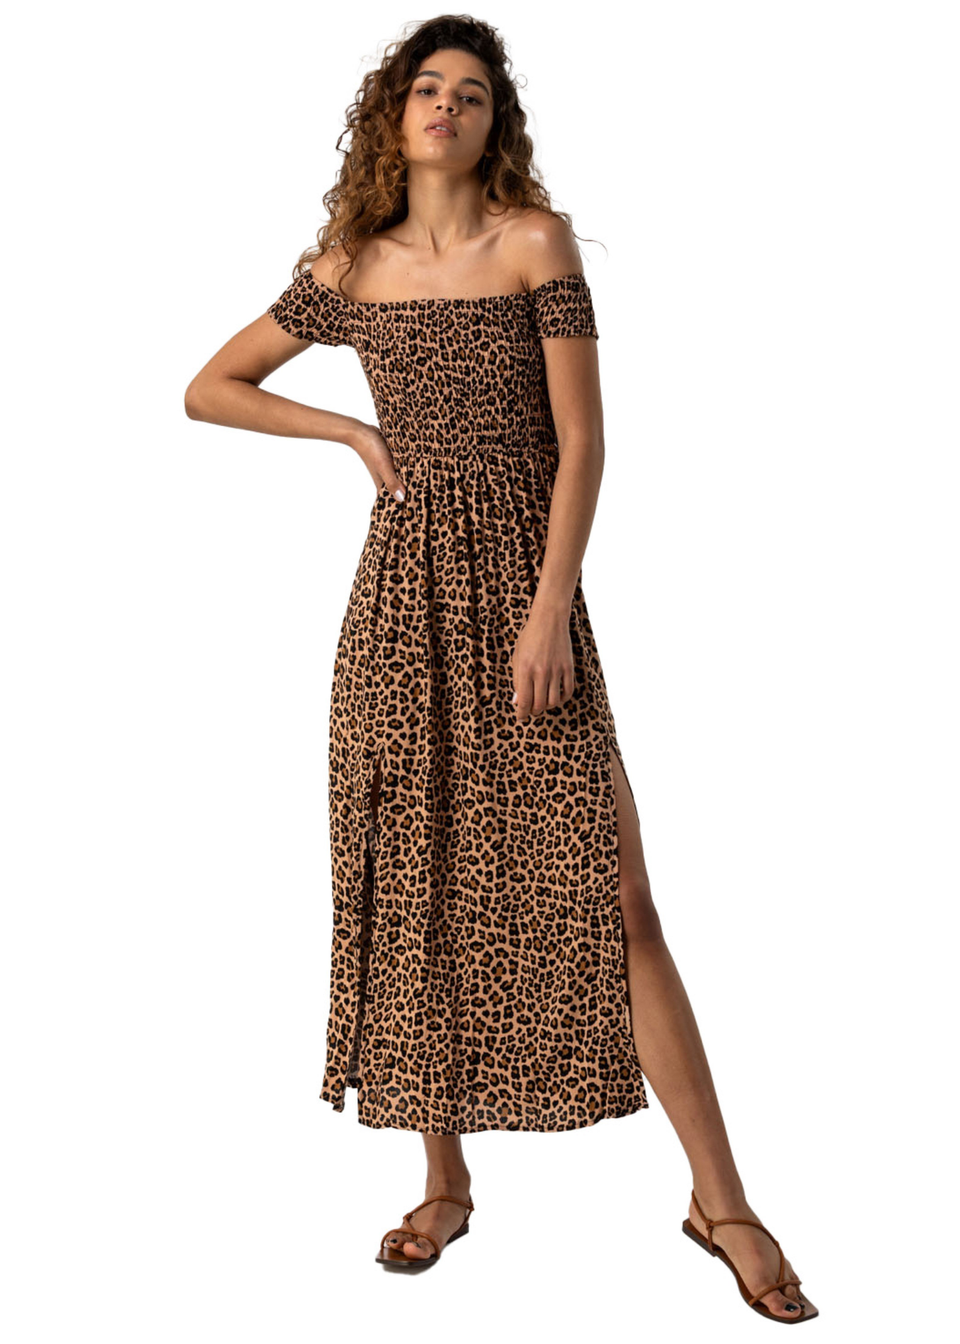 Roman Brown Shirred Animal Print Bardot Dress